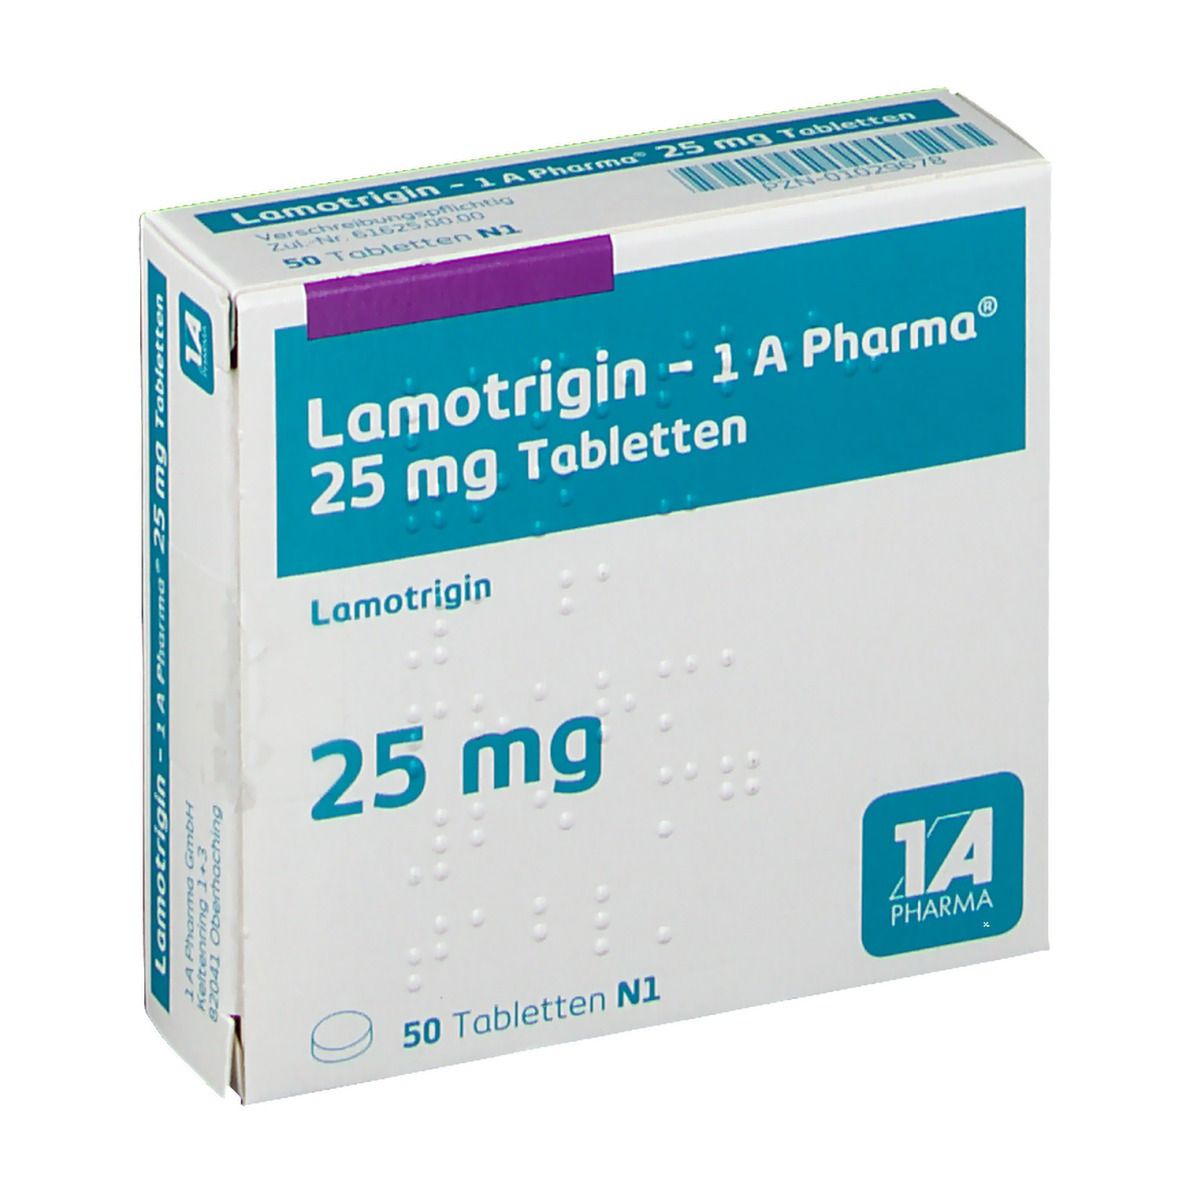 Lamotrigin - 1 A Pharma® 25 mg